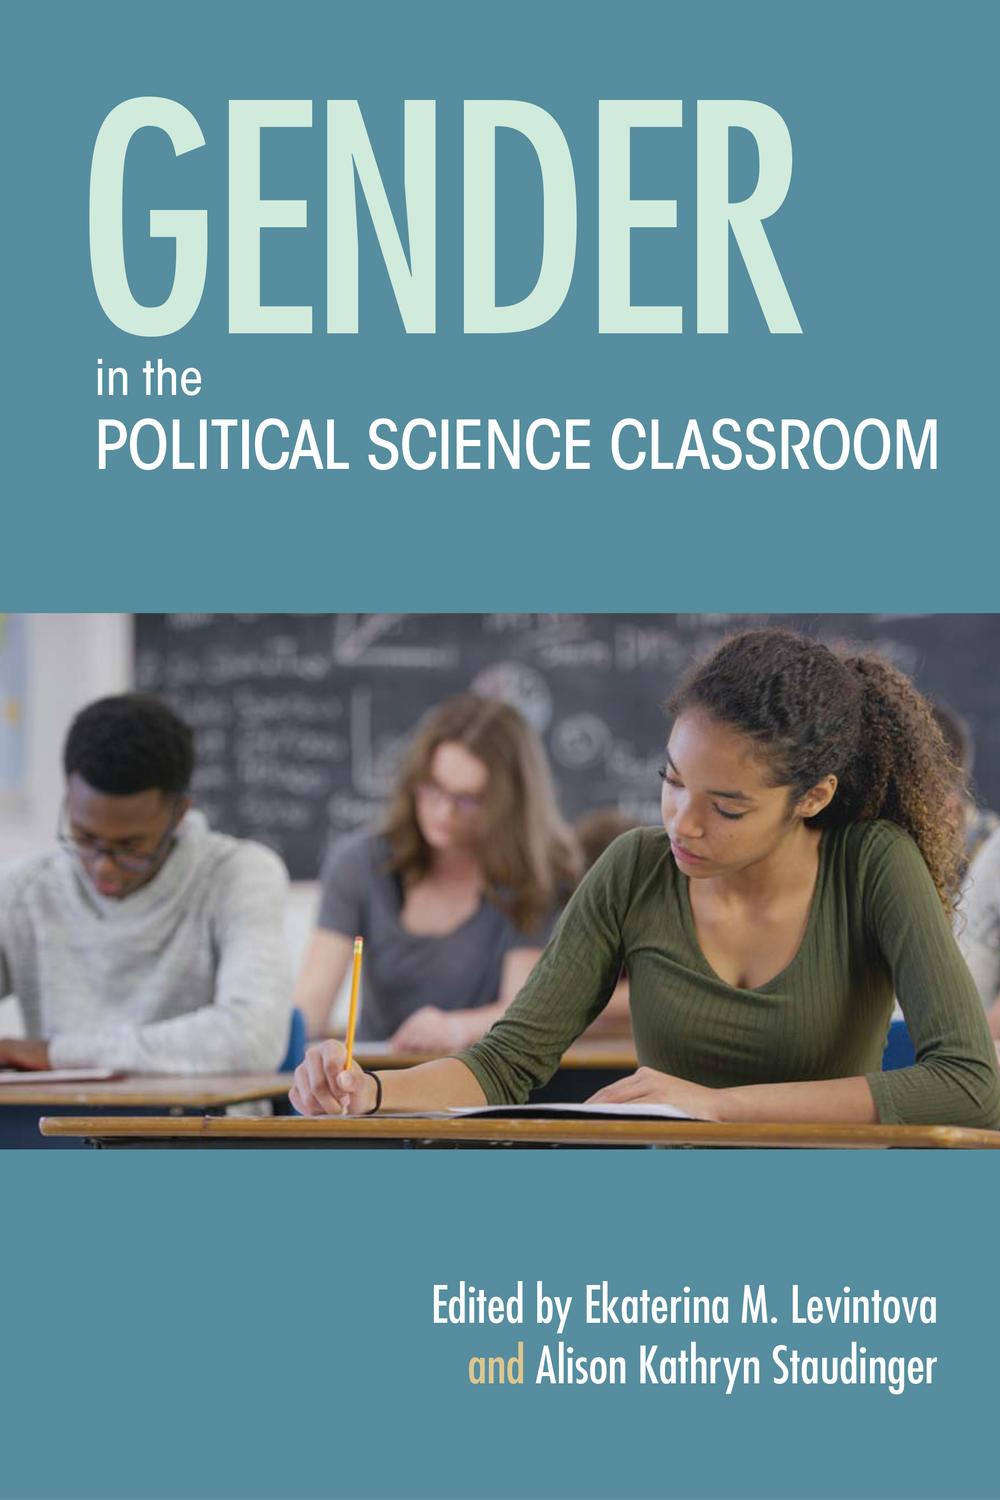 Gender in the Political Science Classroom - Ekaterina M. Levintova, Alison Kathryn Staudinger